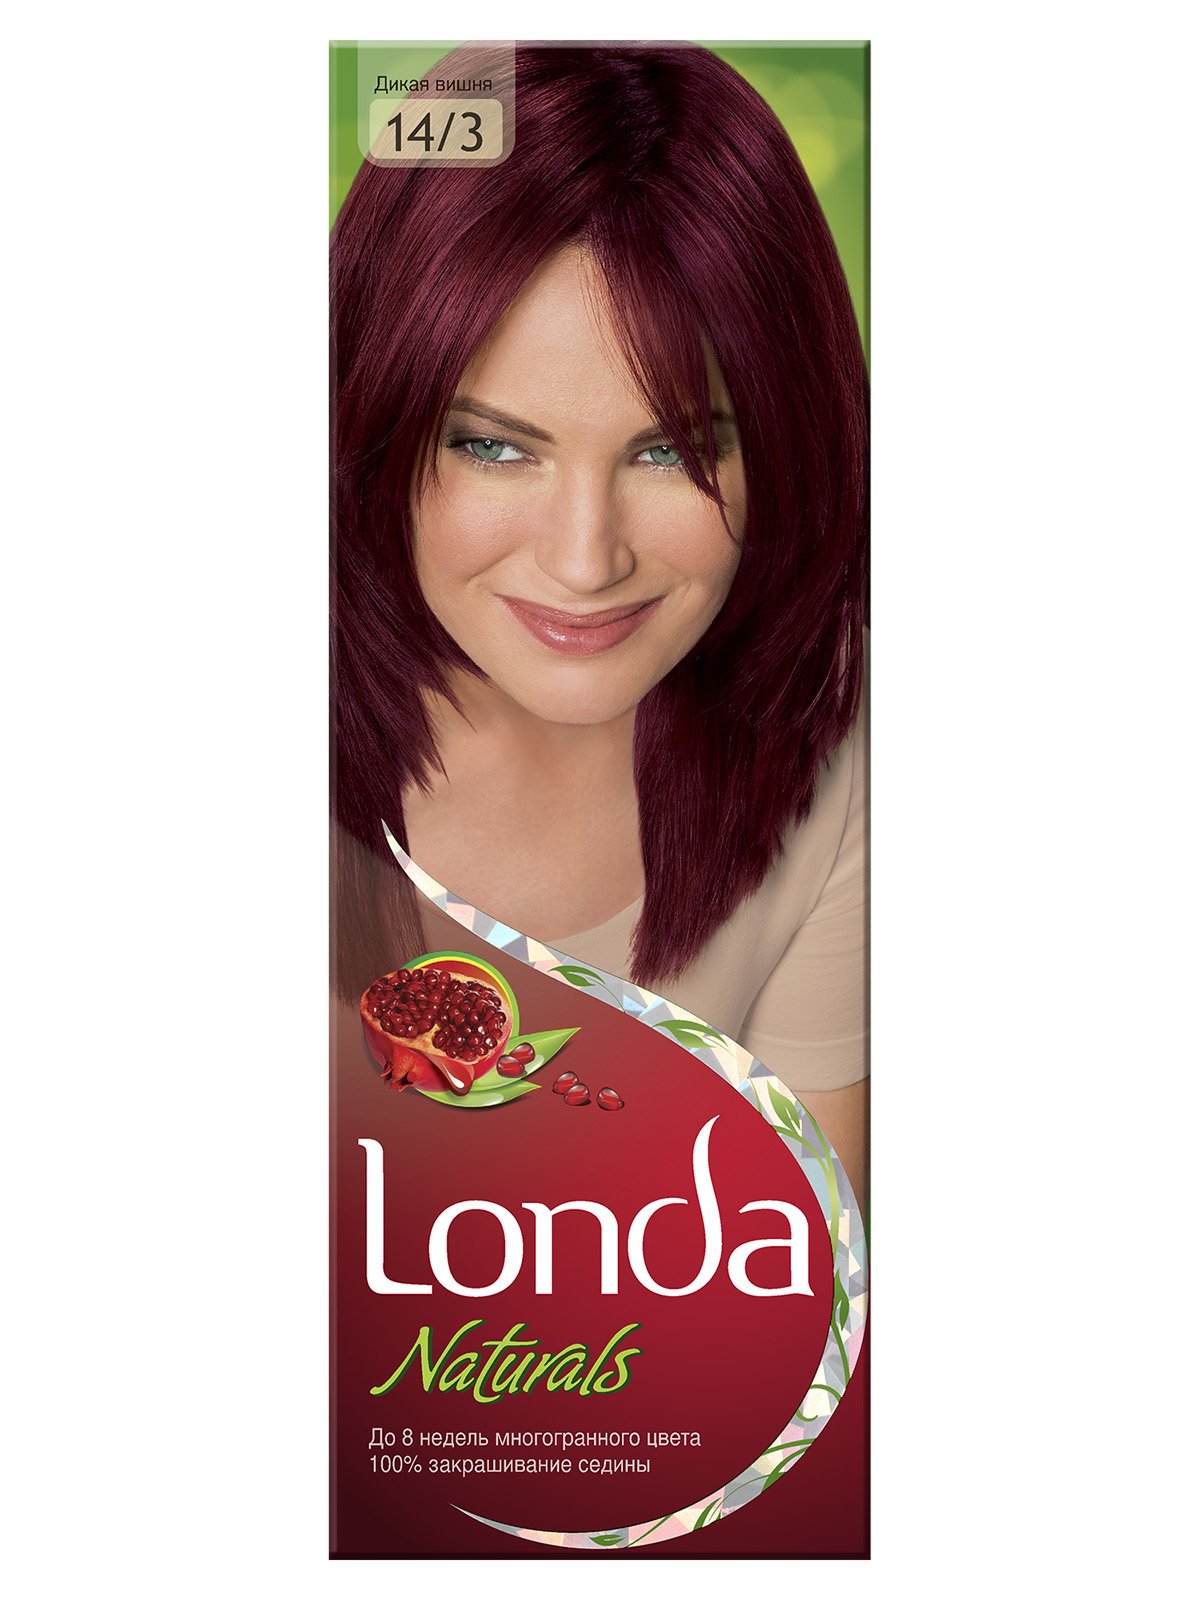 Дикая вишня краска. Краска для волос Londa Color вишня. Цвет Дикая вишня краска. Краска для волос спелая вишня. Дикая вишня краска для волос.